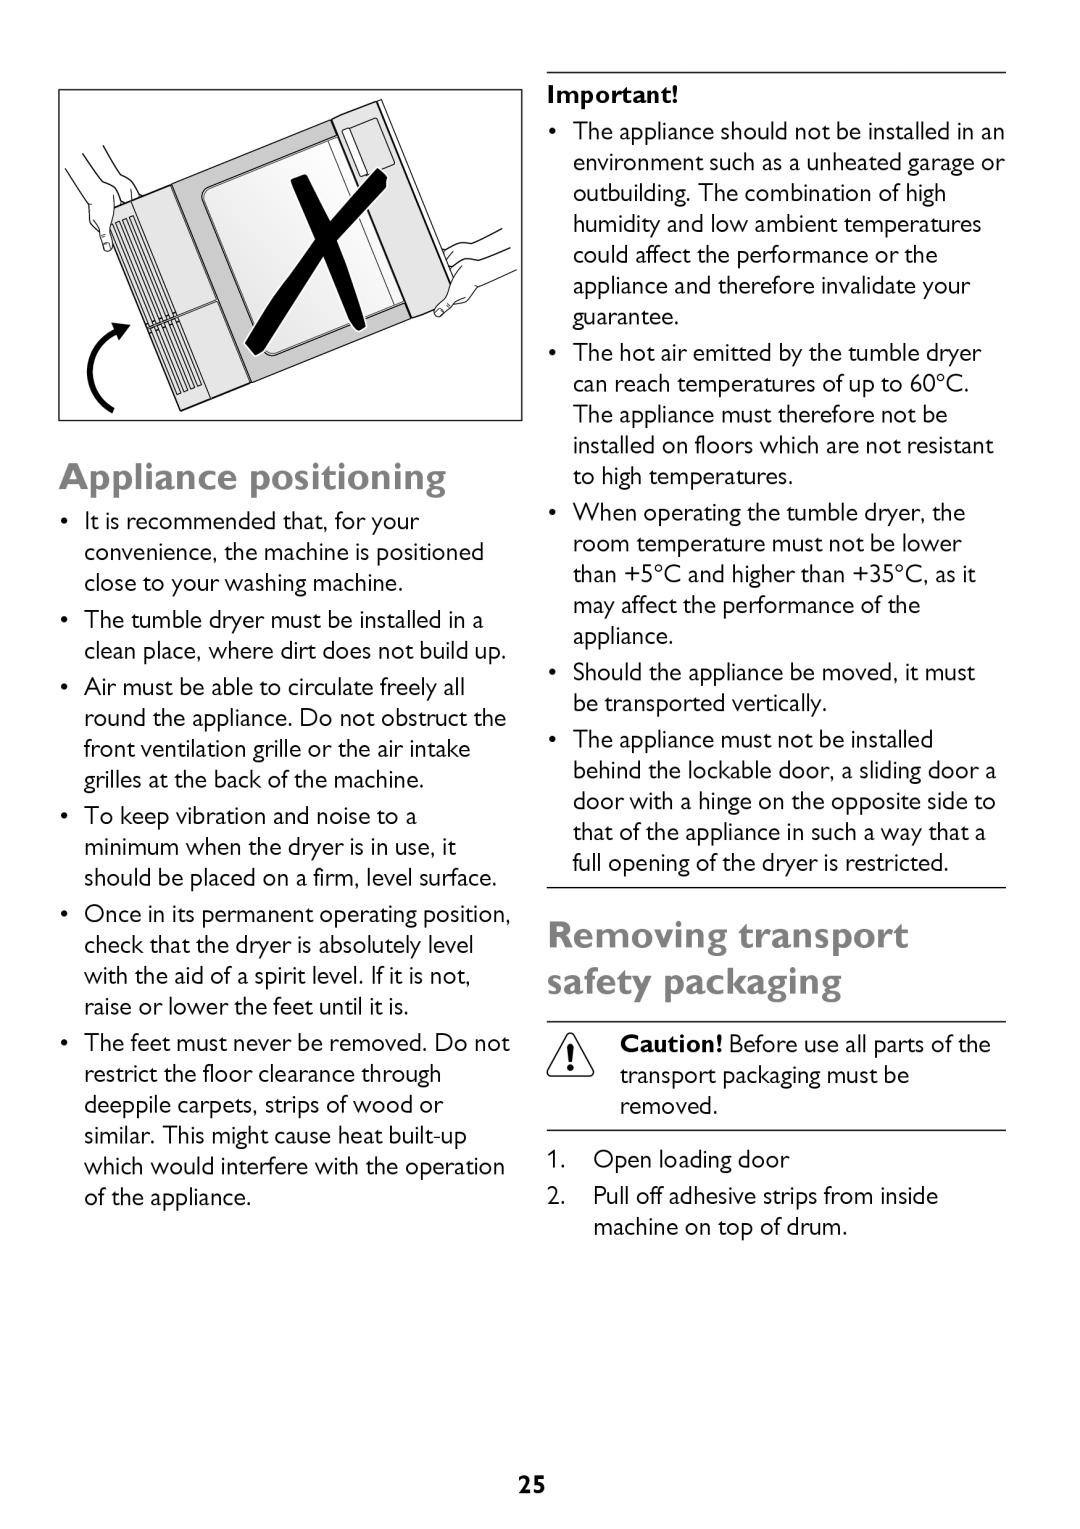 John Lewis JLTDH15 instruction manual Appliance positioning, Removing transport safety packaging 